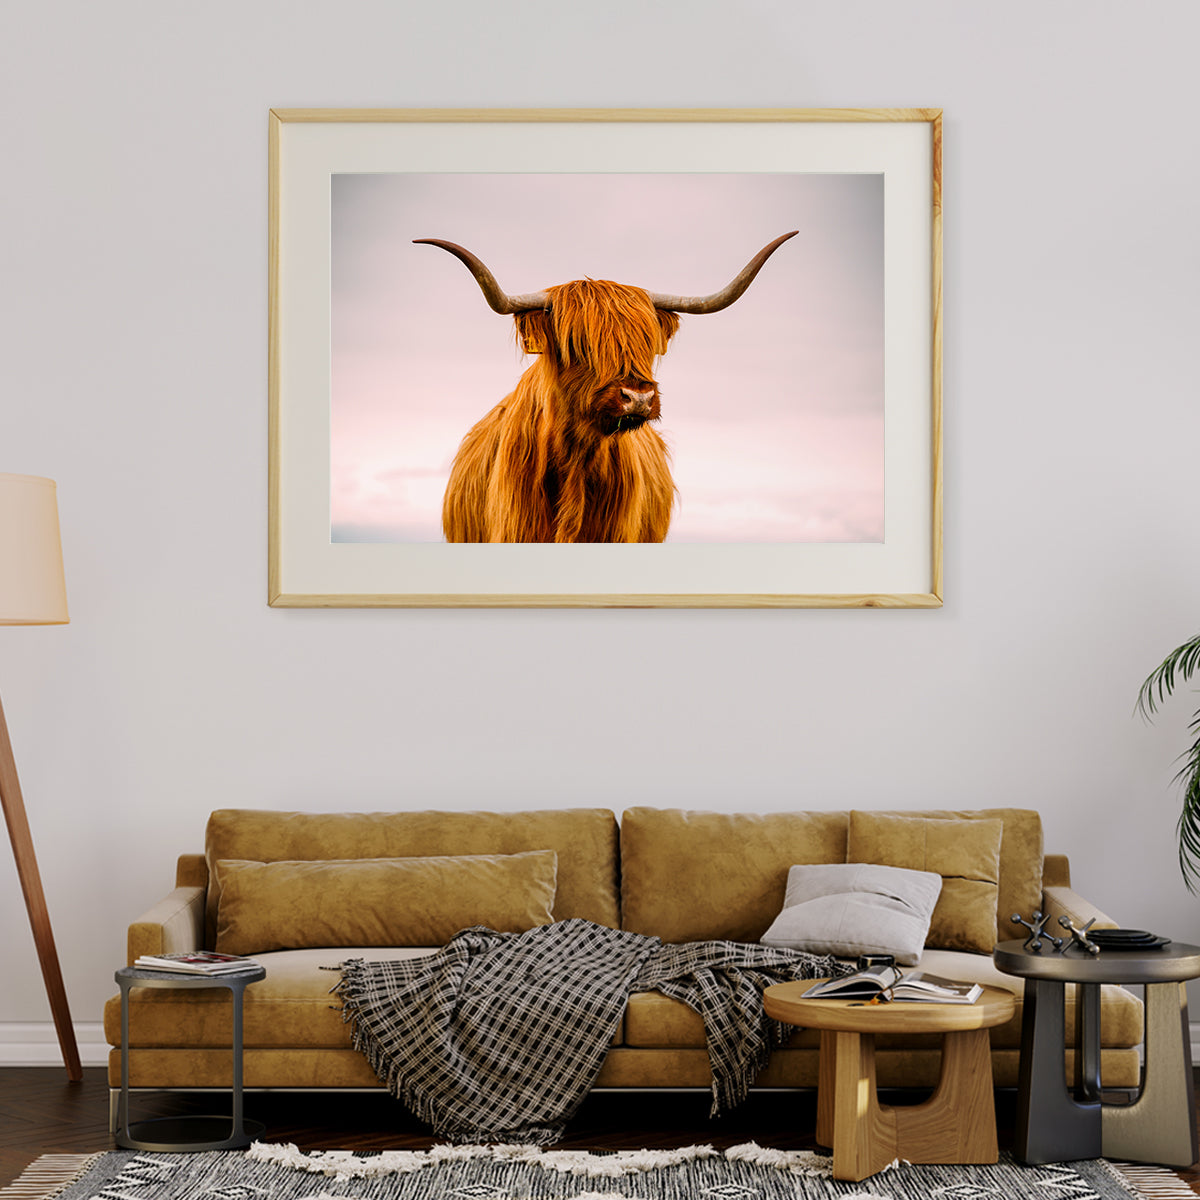 Highland Cow Wall Poster Art Print-Horizontal Posters NOT FRAMED-CetArt-10″x8″ inches-CetArt